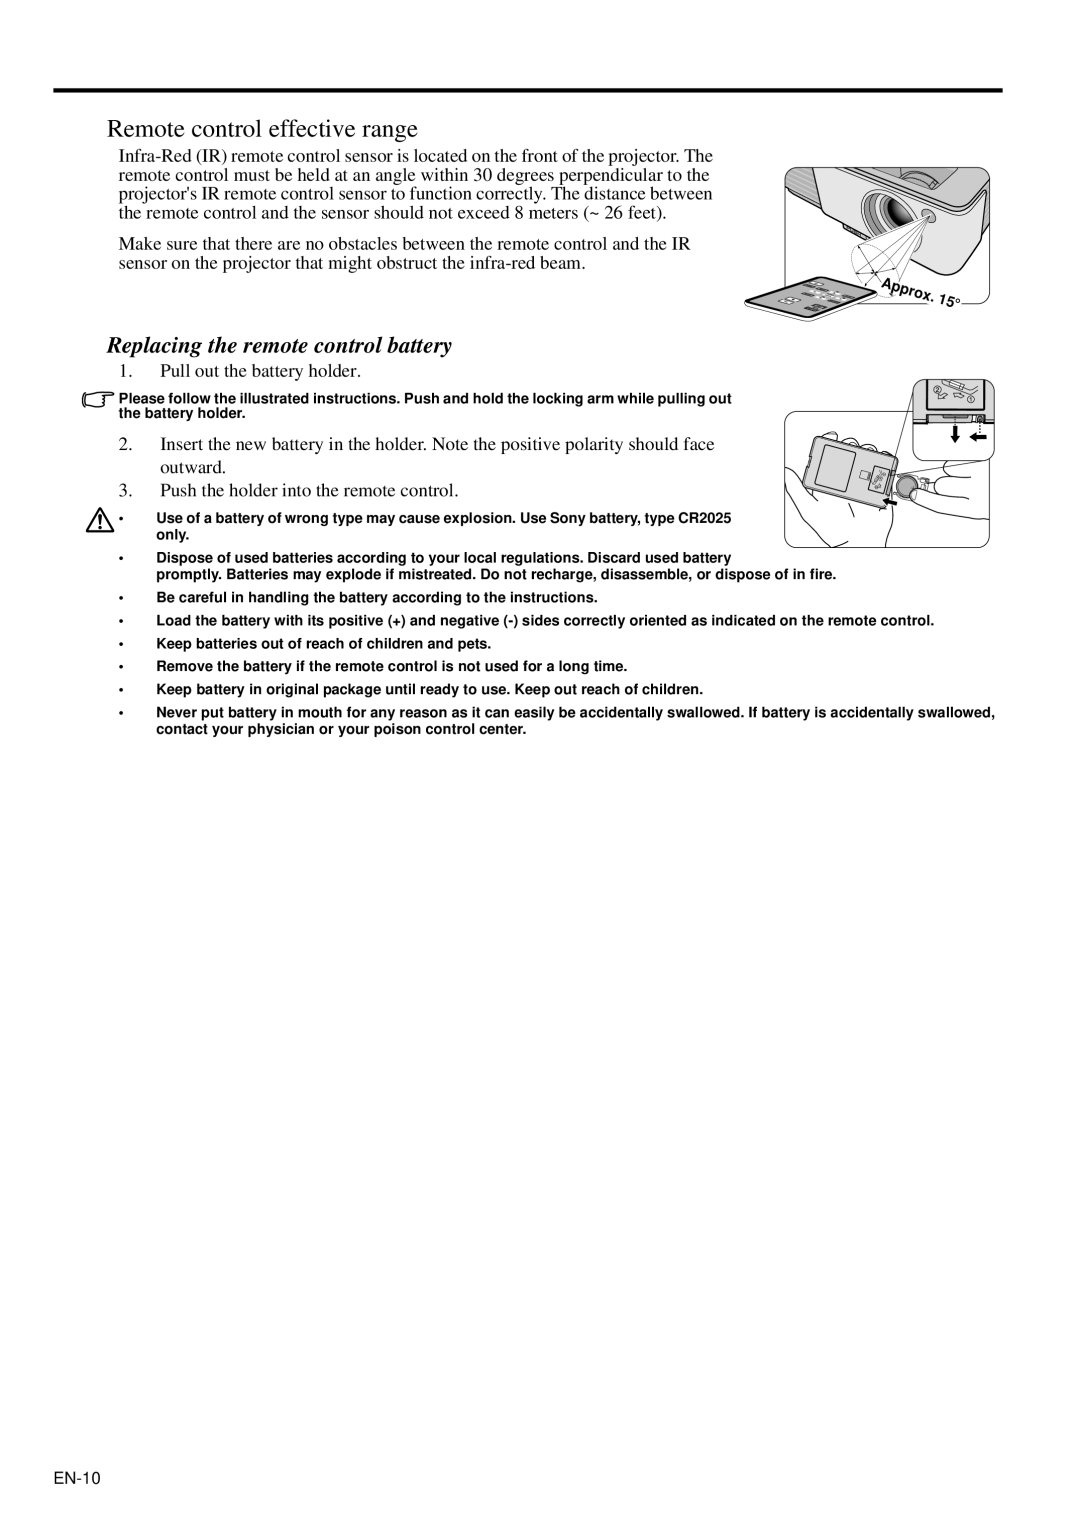 Mitsubishi Electronics XD95U user manual Remote control effective range, Replacing the remote control battery 